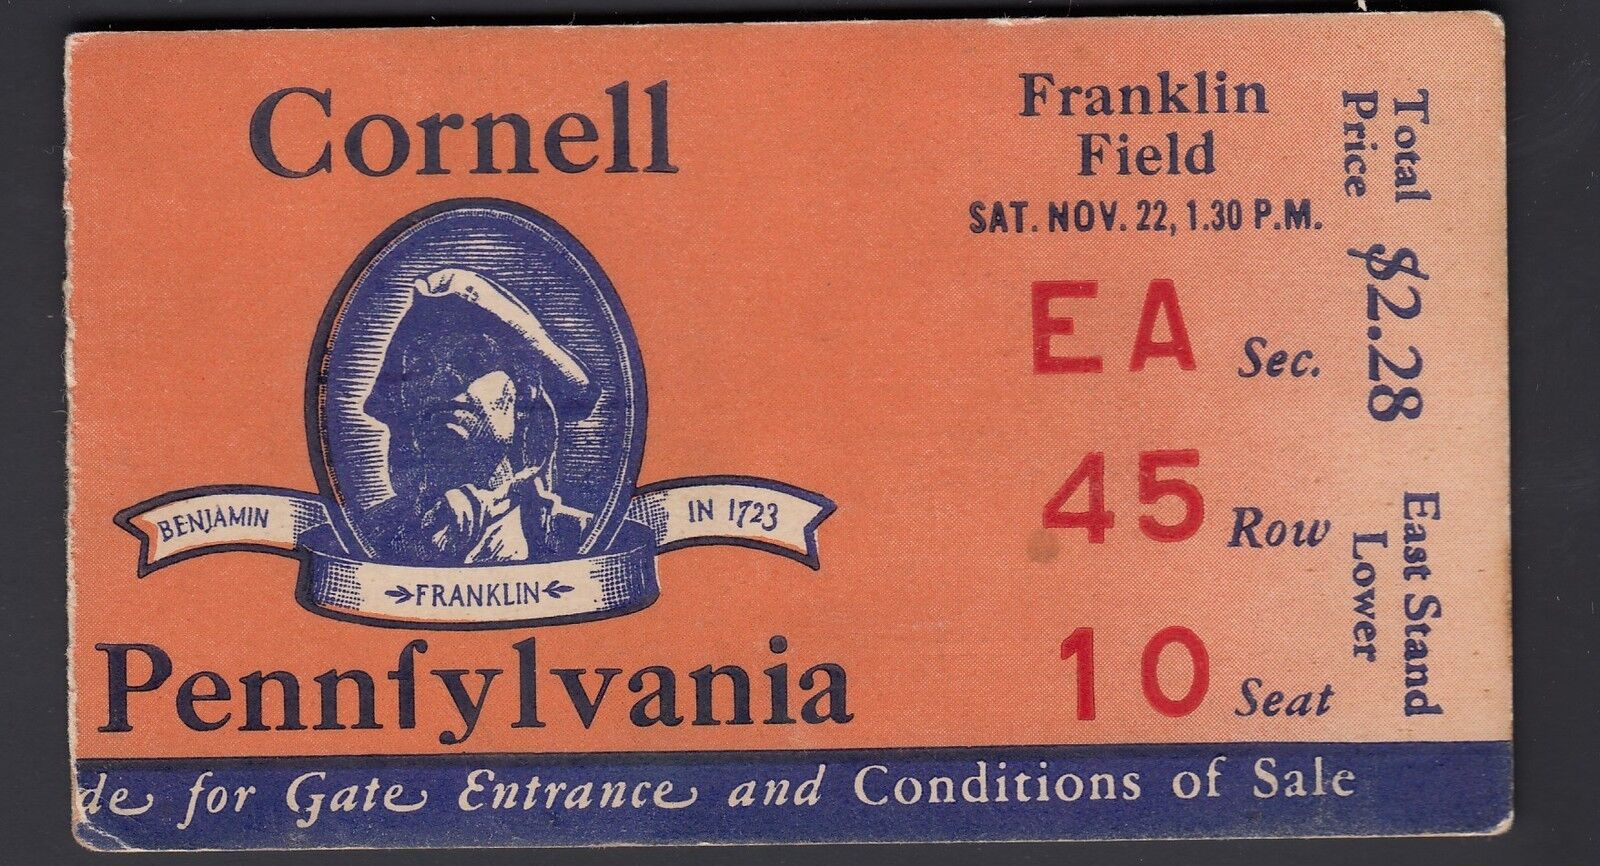 Cornell at University of Pennsylvania November 22 1941 Vintage FB Ticket Stub